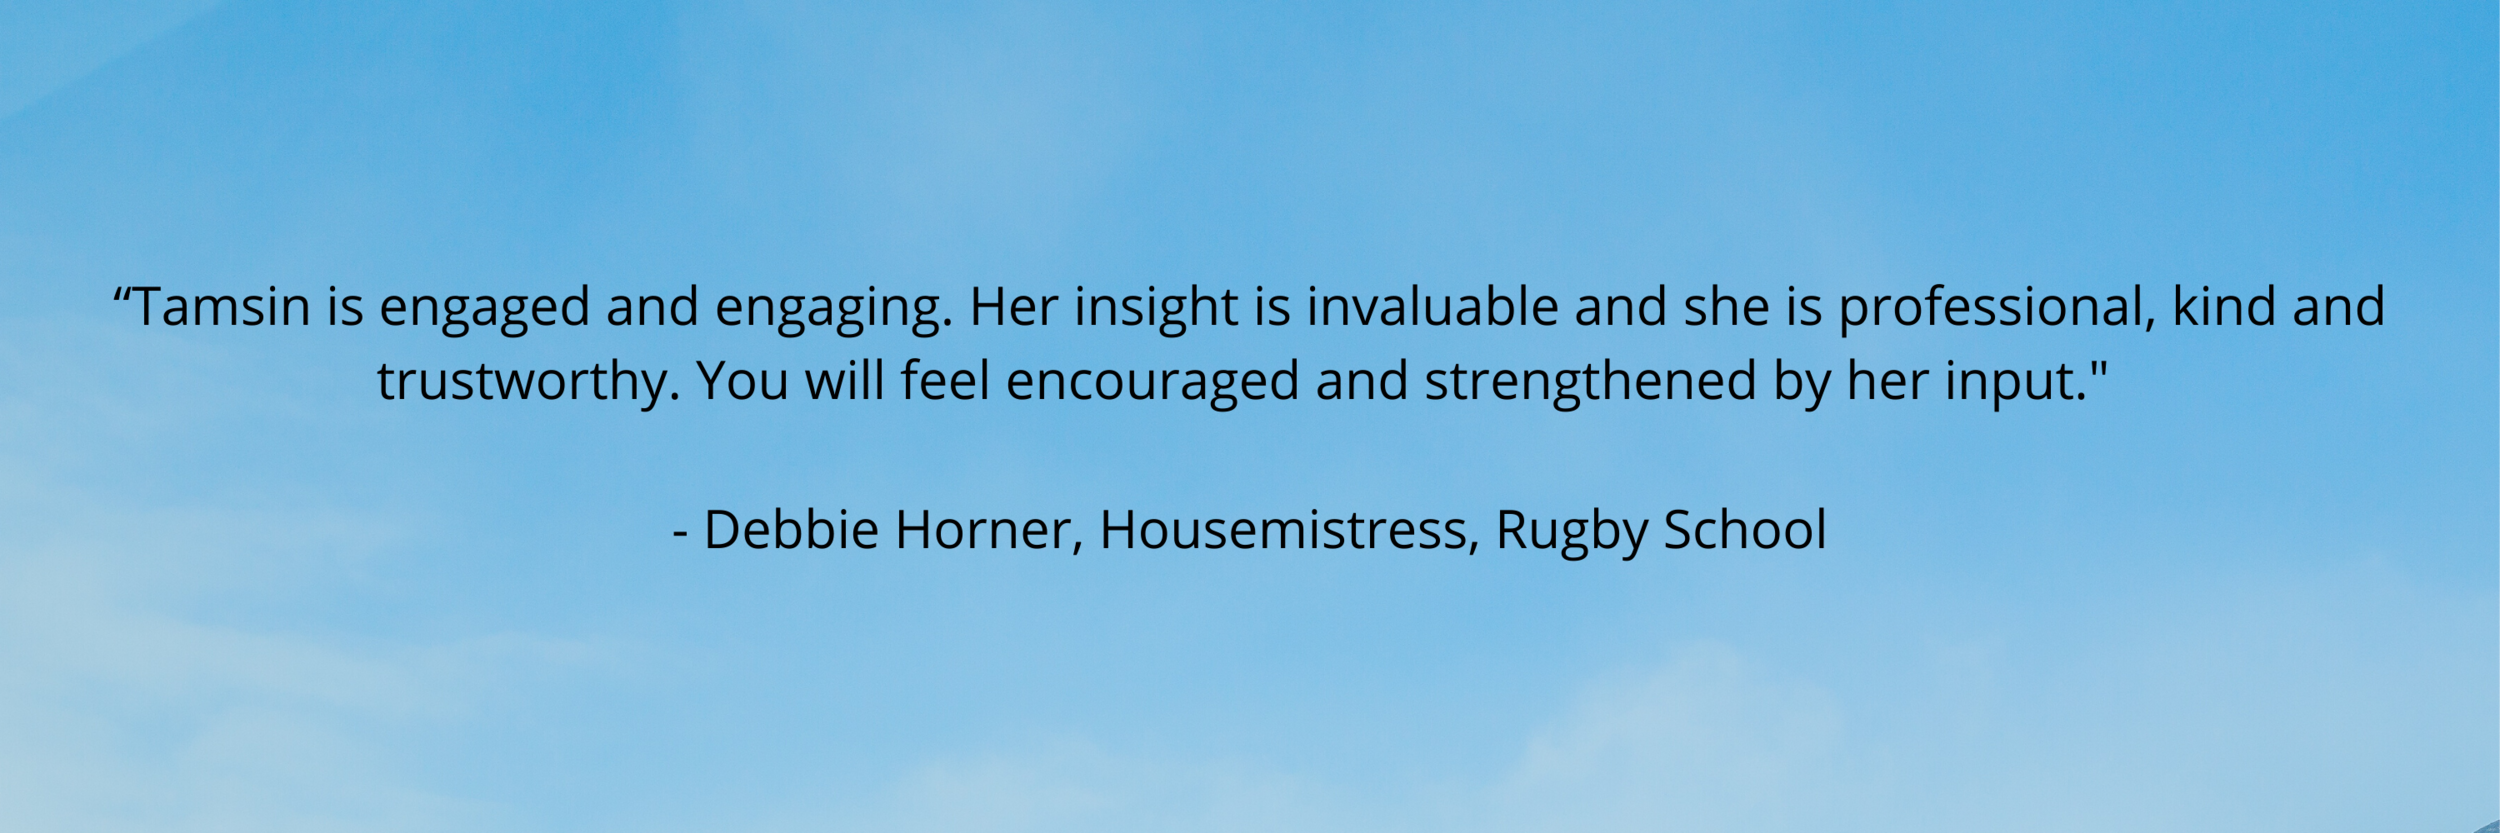 - Debbie Horner, Housemistress, Rugby School.png